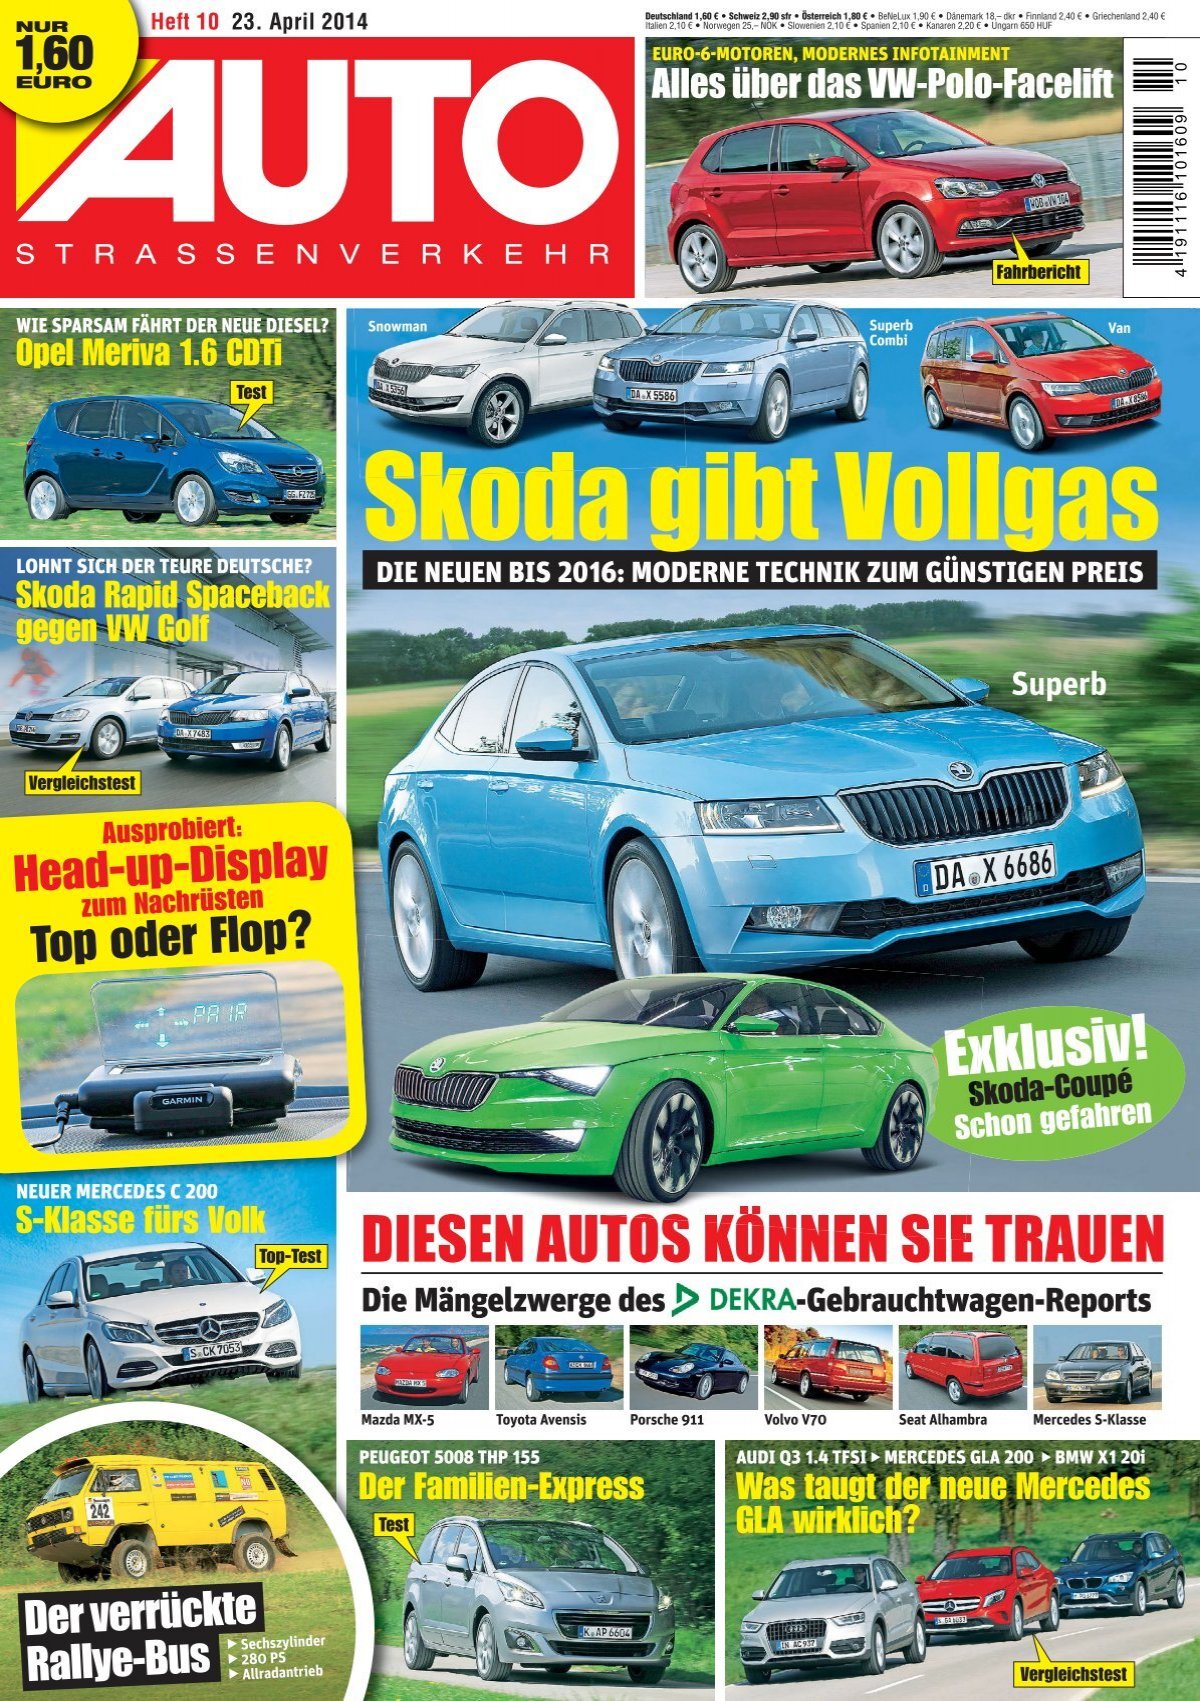 AUTOStraßenverkehr Heft 10-2014